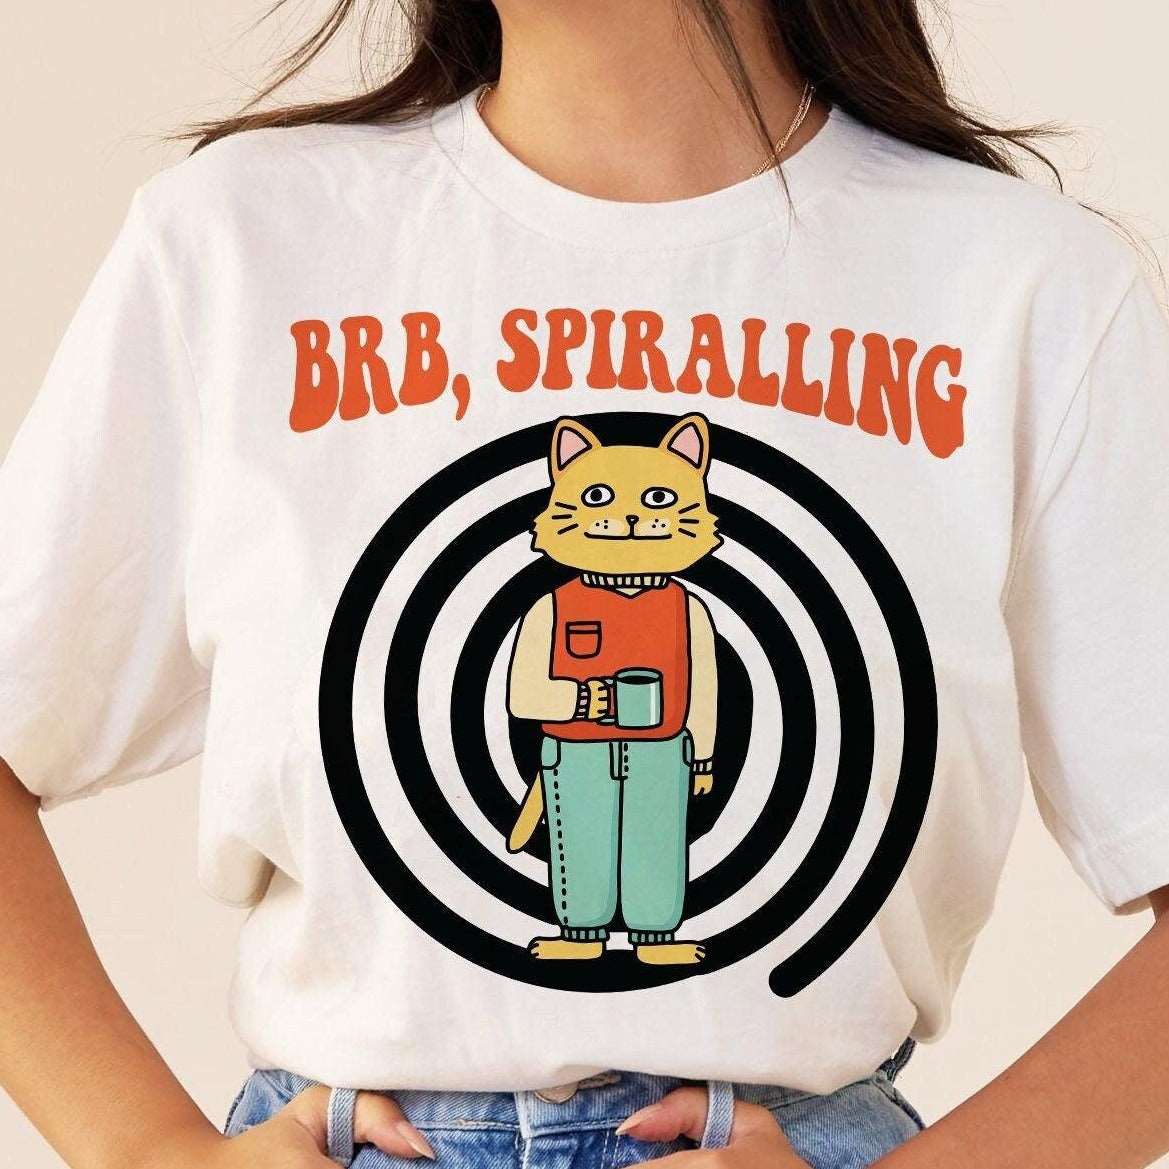 'Brb Sprialling' Meme Cat Shirt - T-shirts - Kinder Planet Company